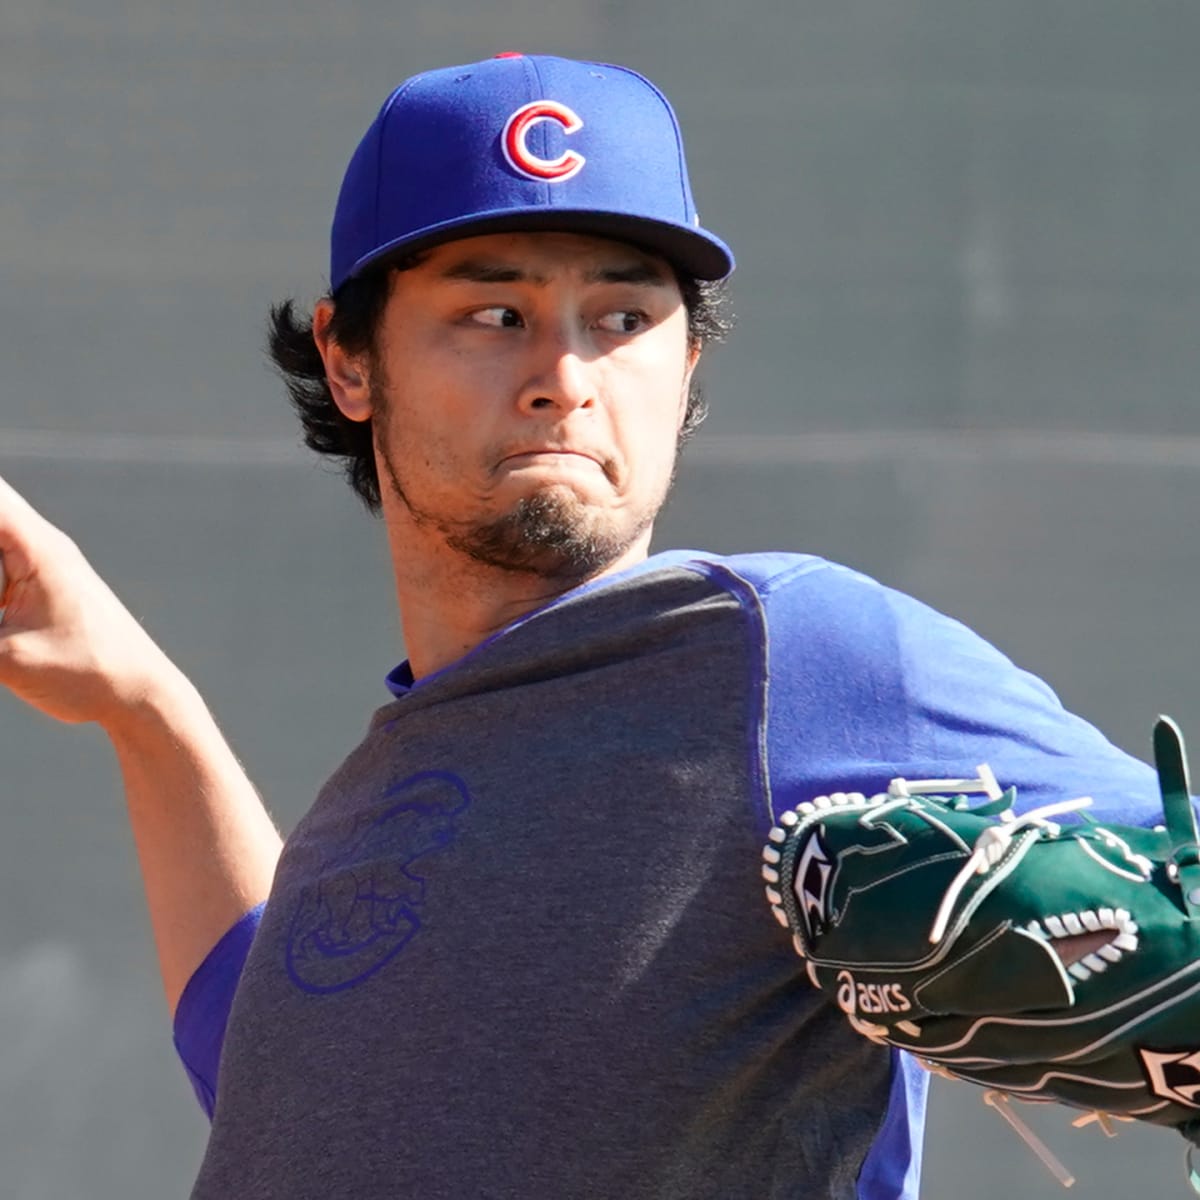 Baseball: Darvish savoring All-Star experience as trade rumors swirl